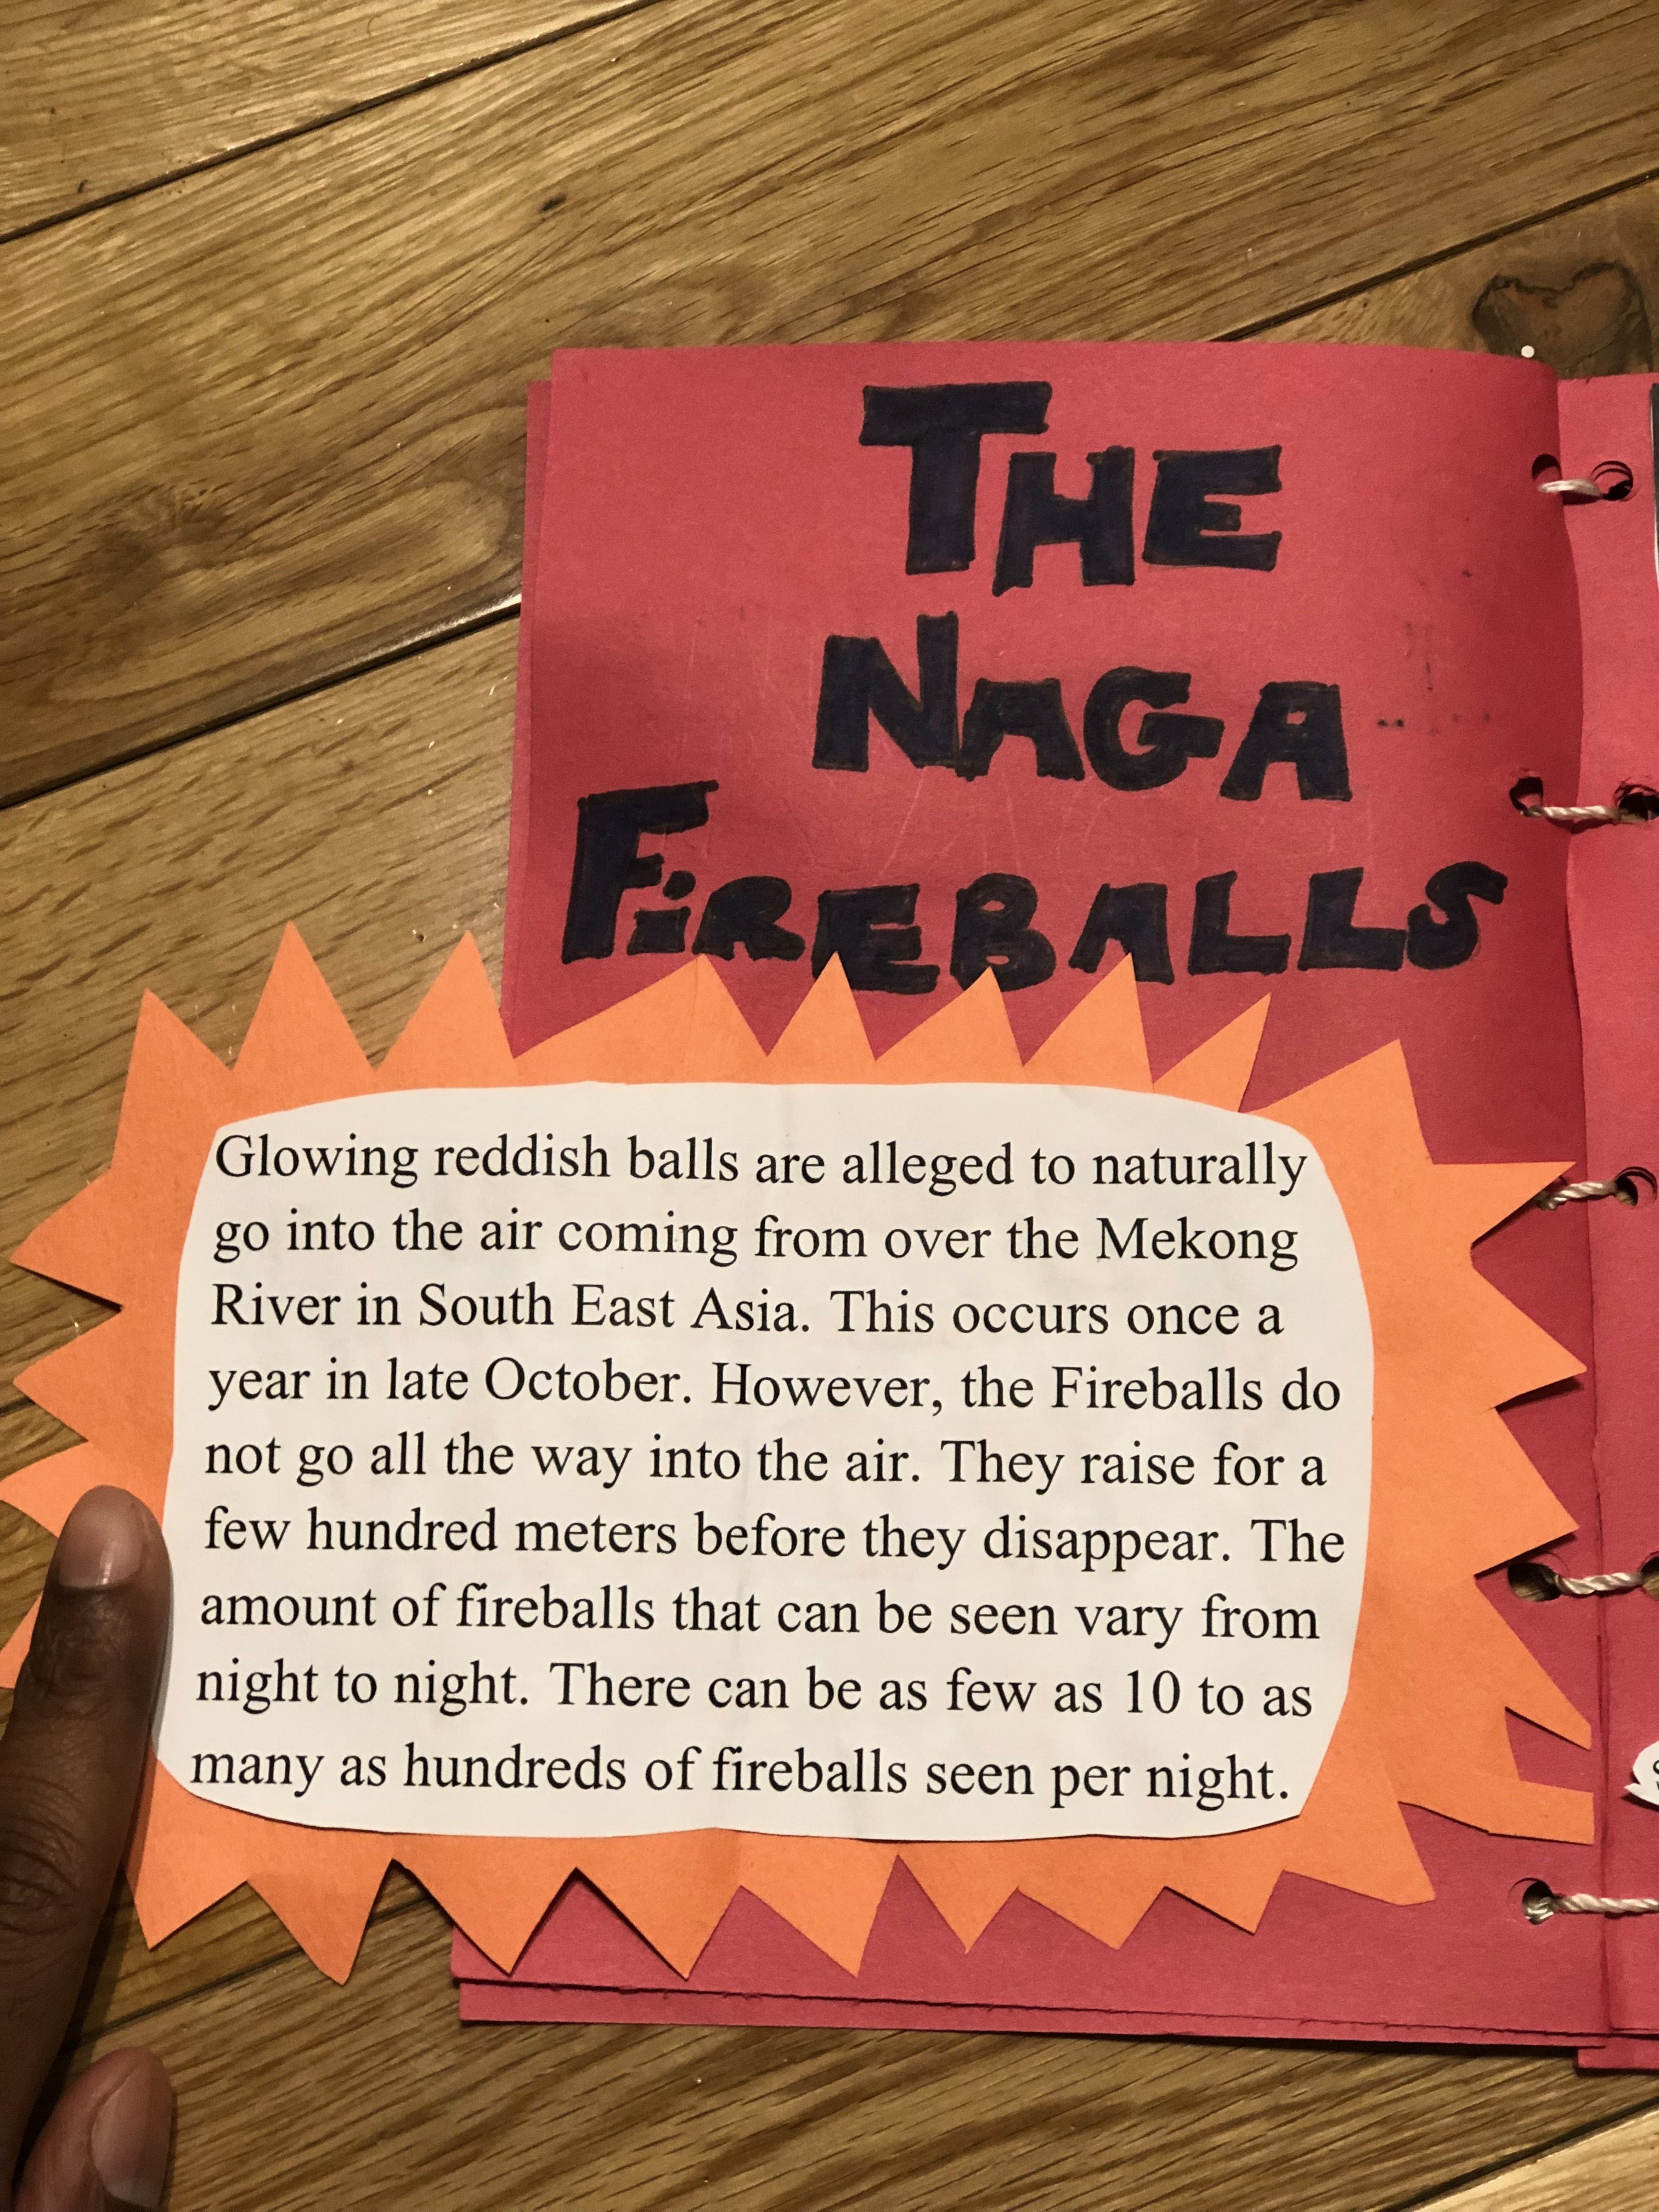 Page 2 – The Naga Fire balls